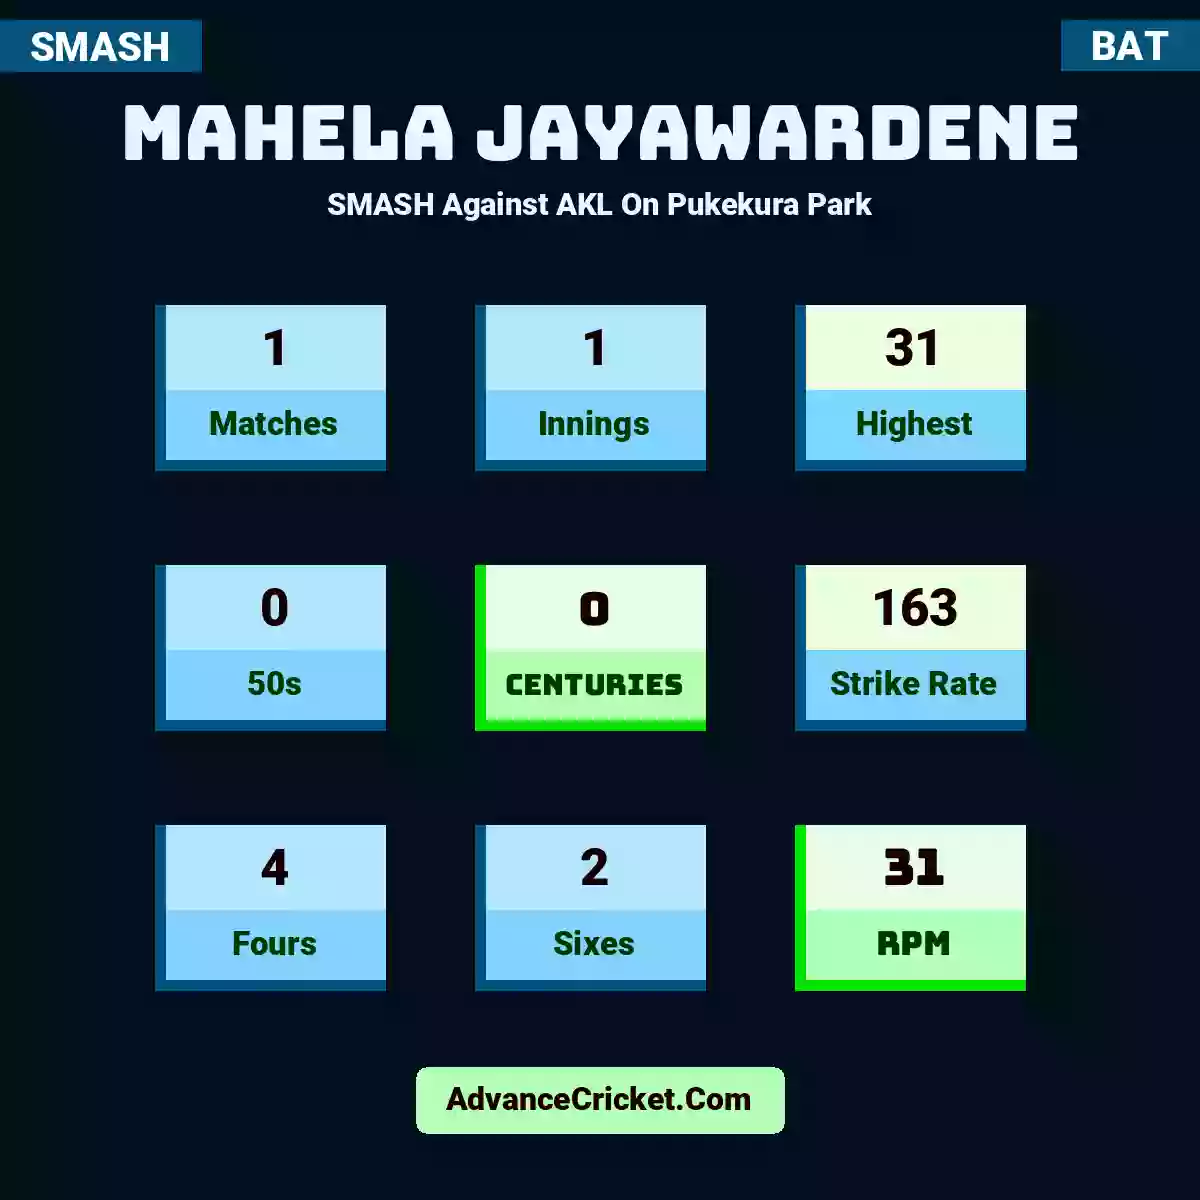 Mahela Jayawardene SMASH  Against AKL On Pukekura Park, Mahela Jayawardene played 1 matches, scored 31 runs as highest, 0 half-centuries, and 0 centuries, with a strike rate of 163. M.Jayawardene hit 4 fours and 2 sixes, with an RPM of 31.